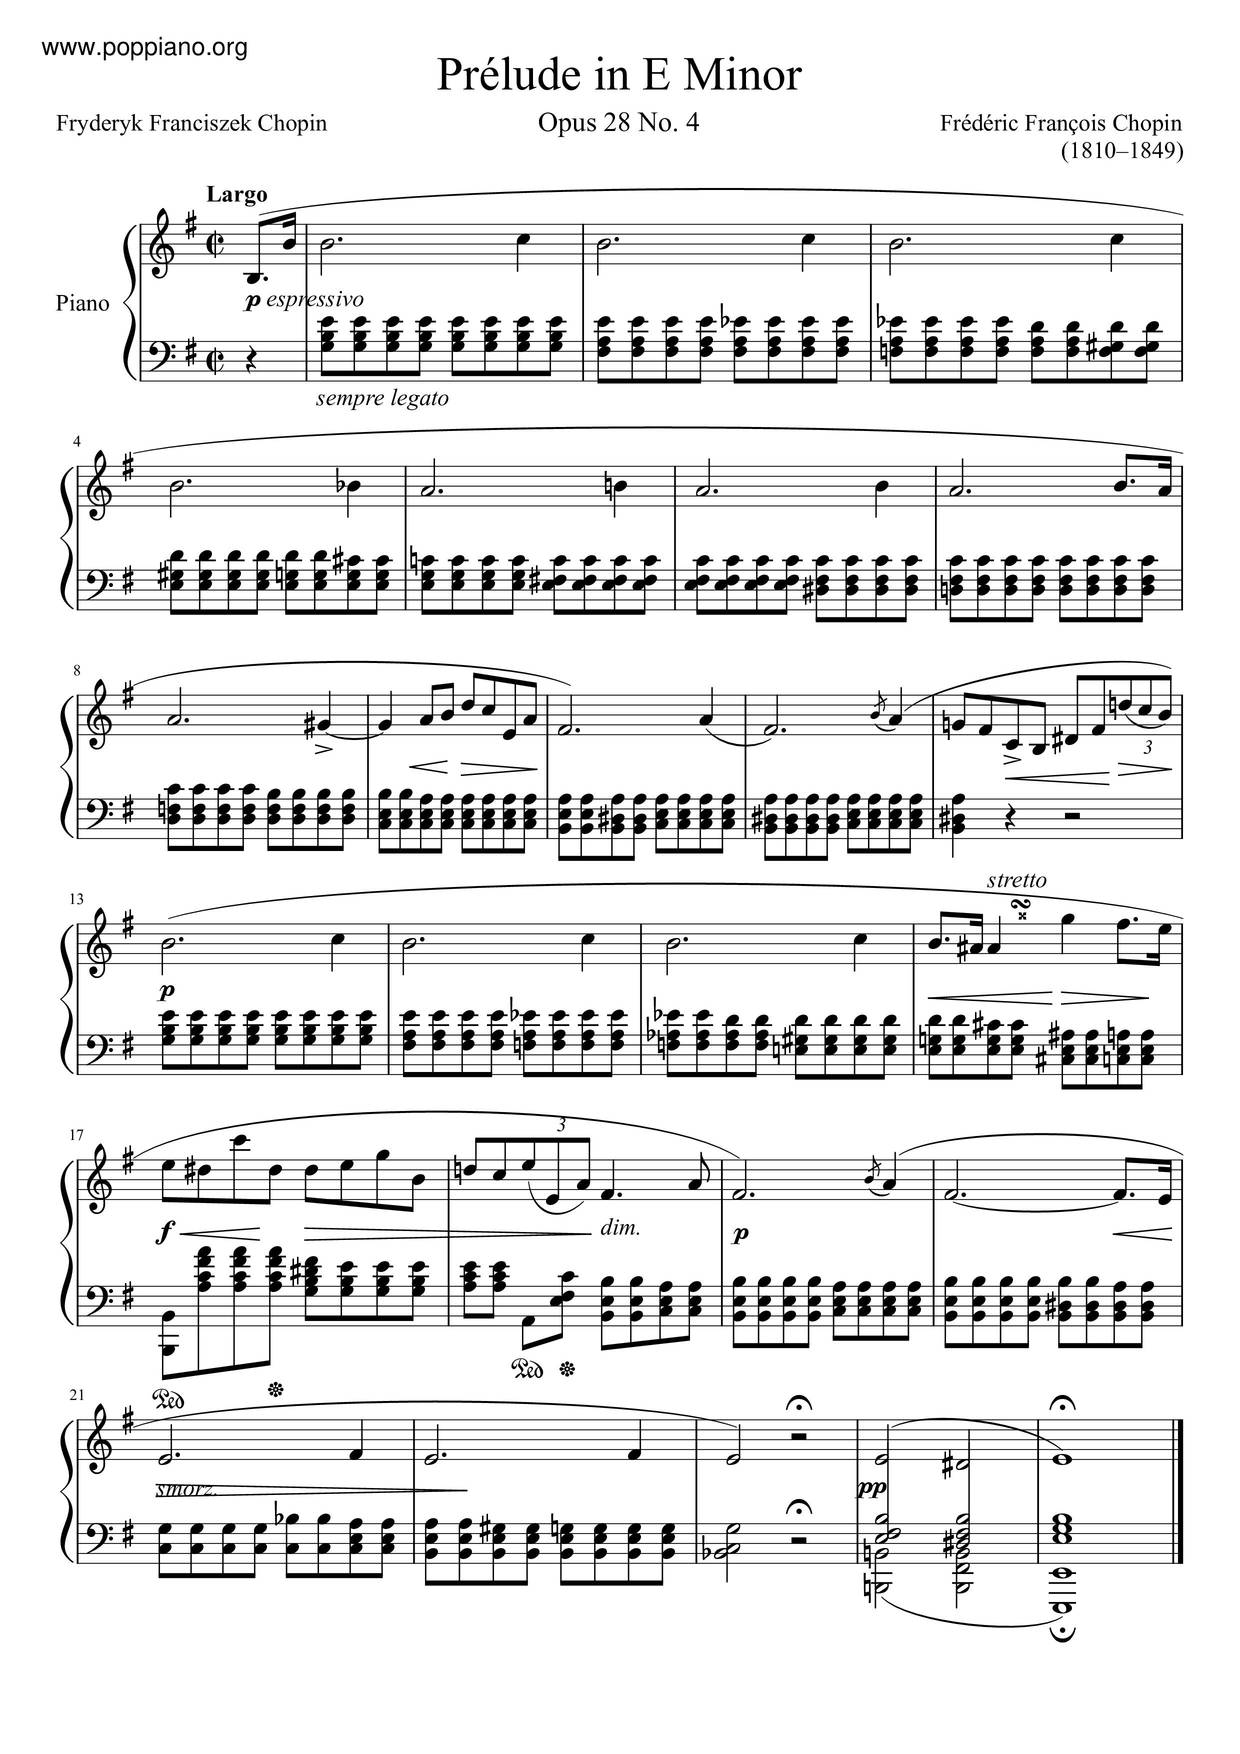 24 Préludes, Op. 28: No.4 in E minor - Largo Score